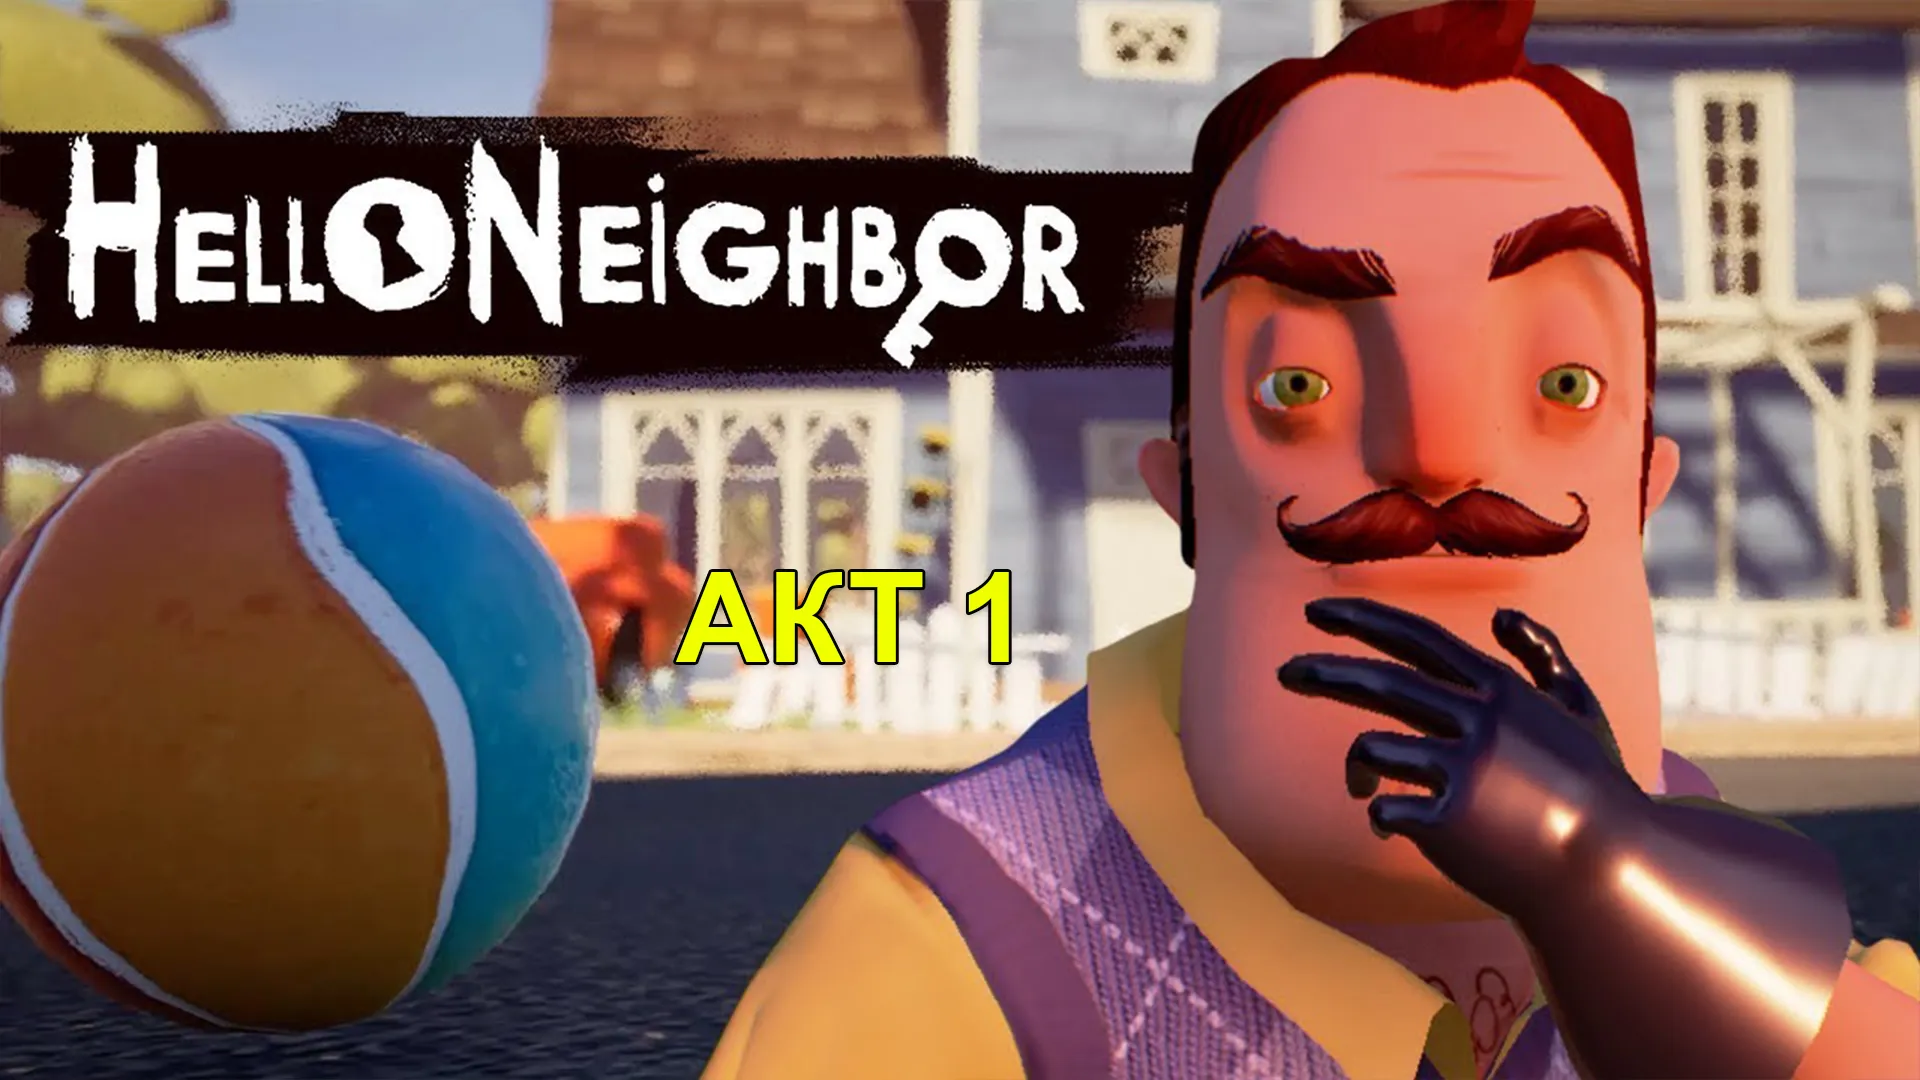 Голова привет соседа. Hello Neighbor игра. Игра привет сосед hello Neighbor игра. Привет сосед сосед Альфа 1. Сосед Хеллоу нейбор.